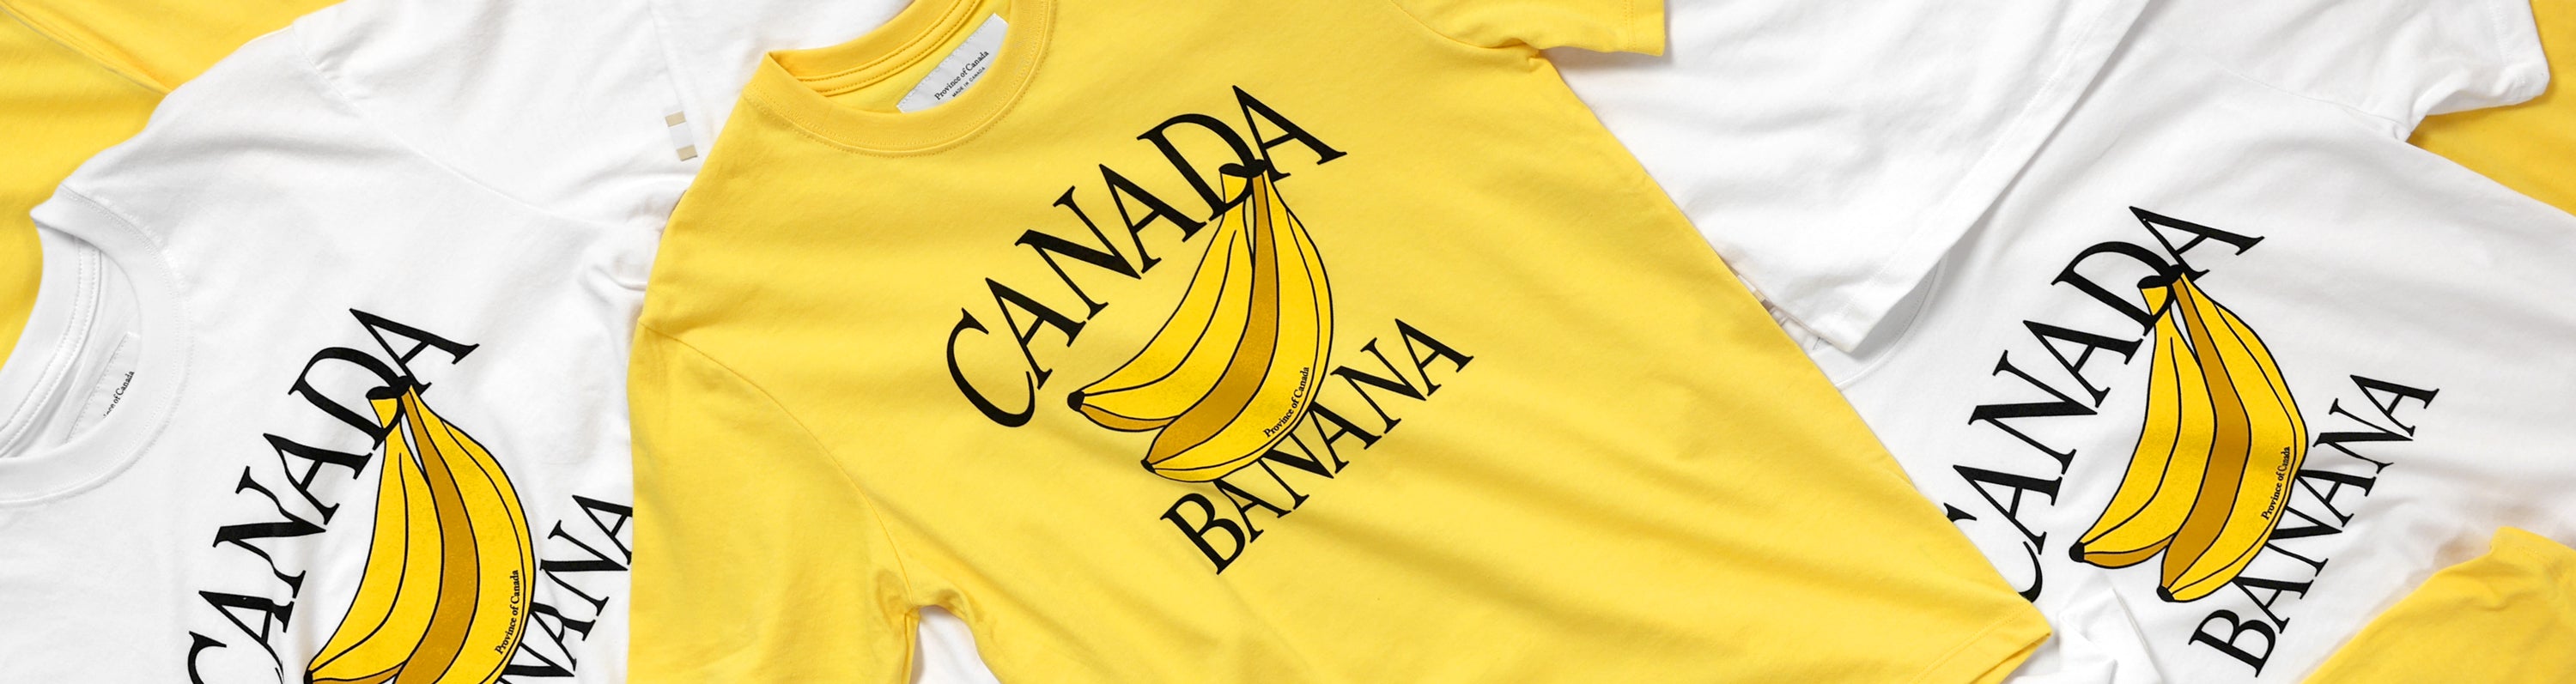 Canada Banana - Province of Canada - Made in Canada